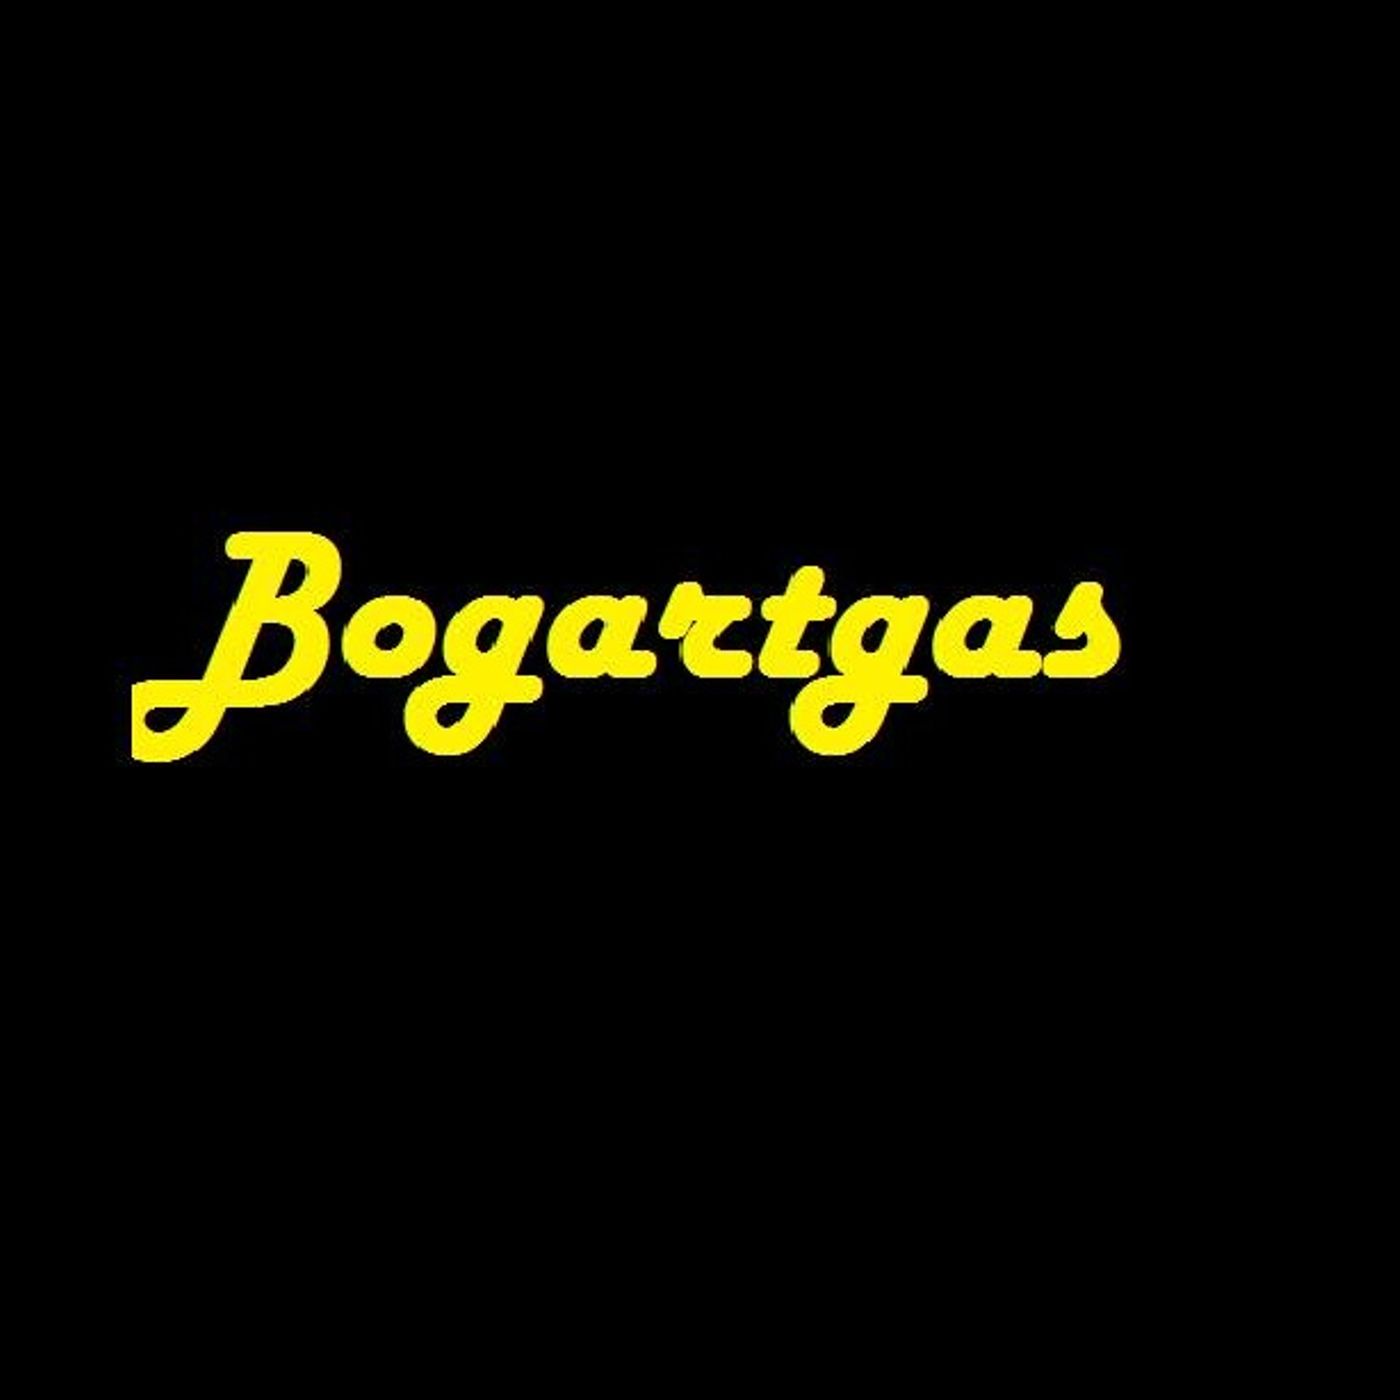 Bogartgas